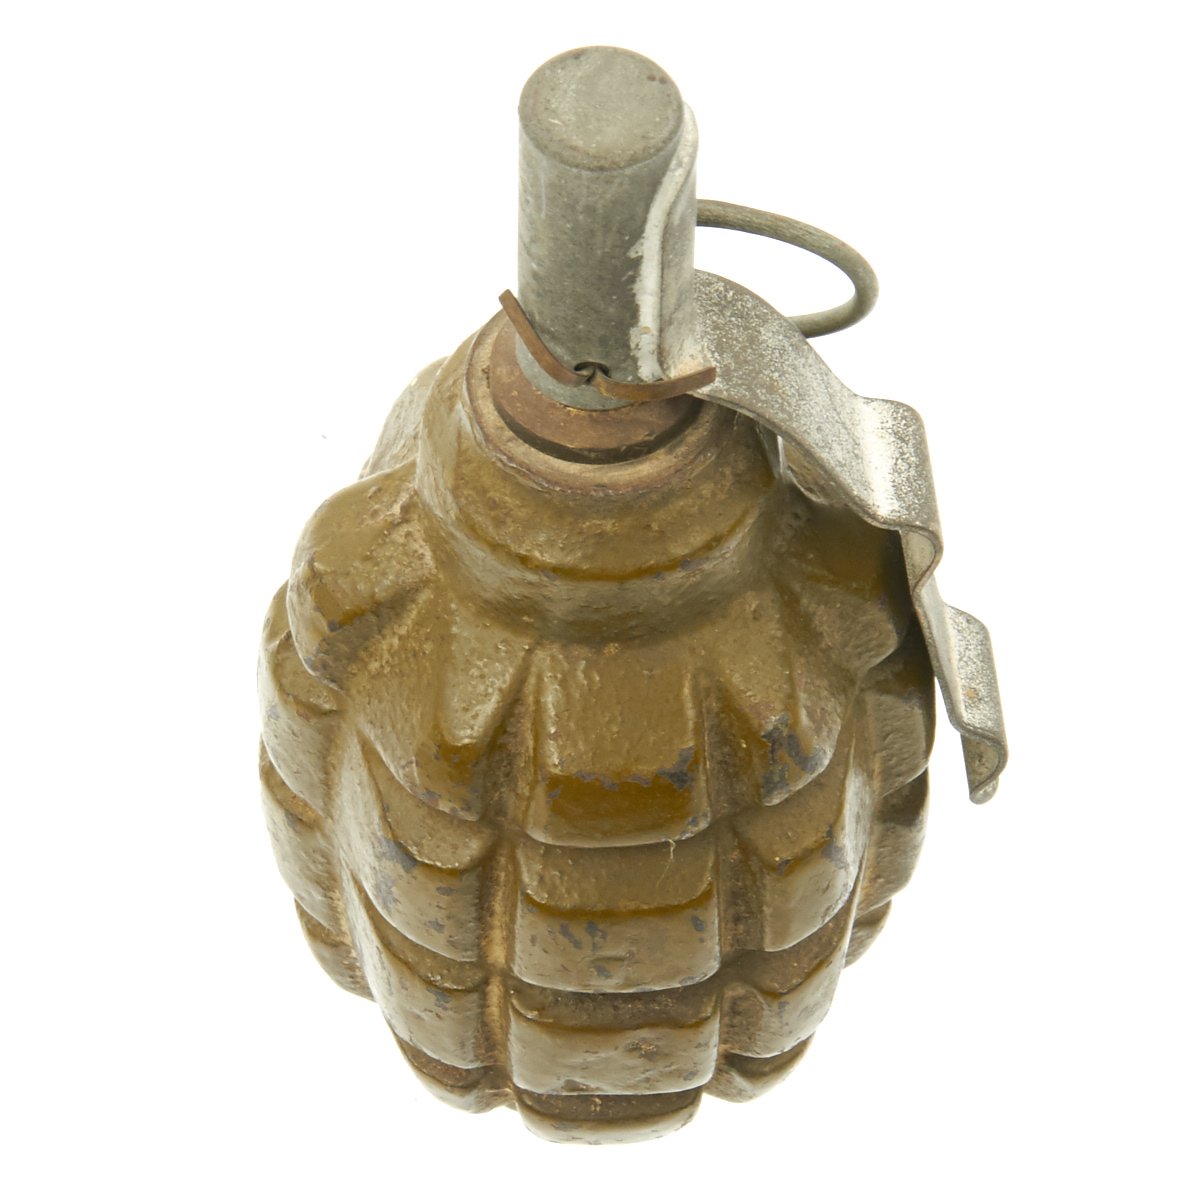 F1 Soviet Frag Grenade Cutaway - Inert Replica - Inert Products LLC